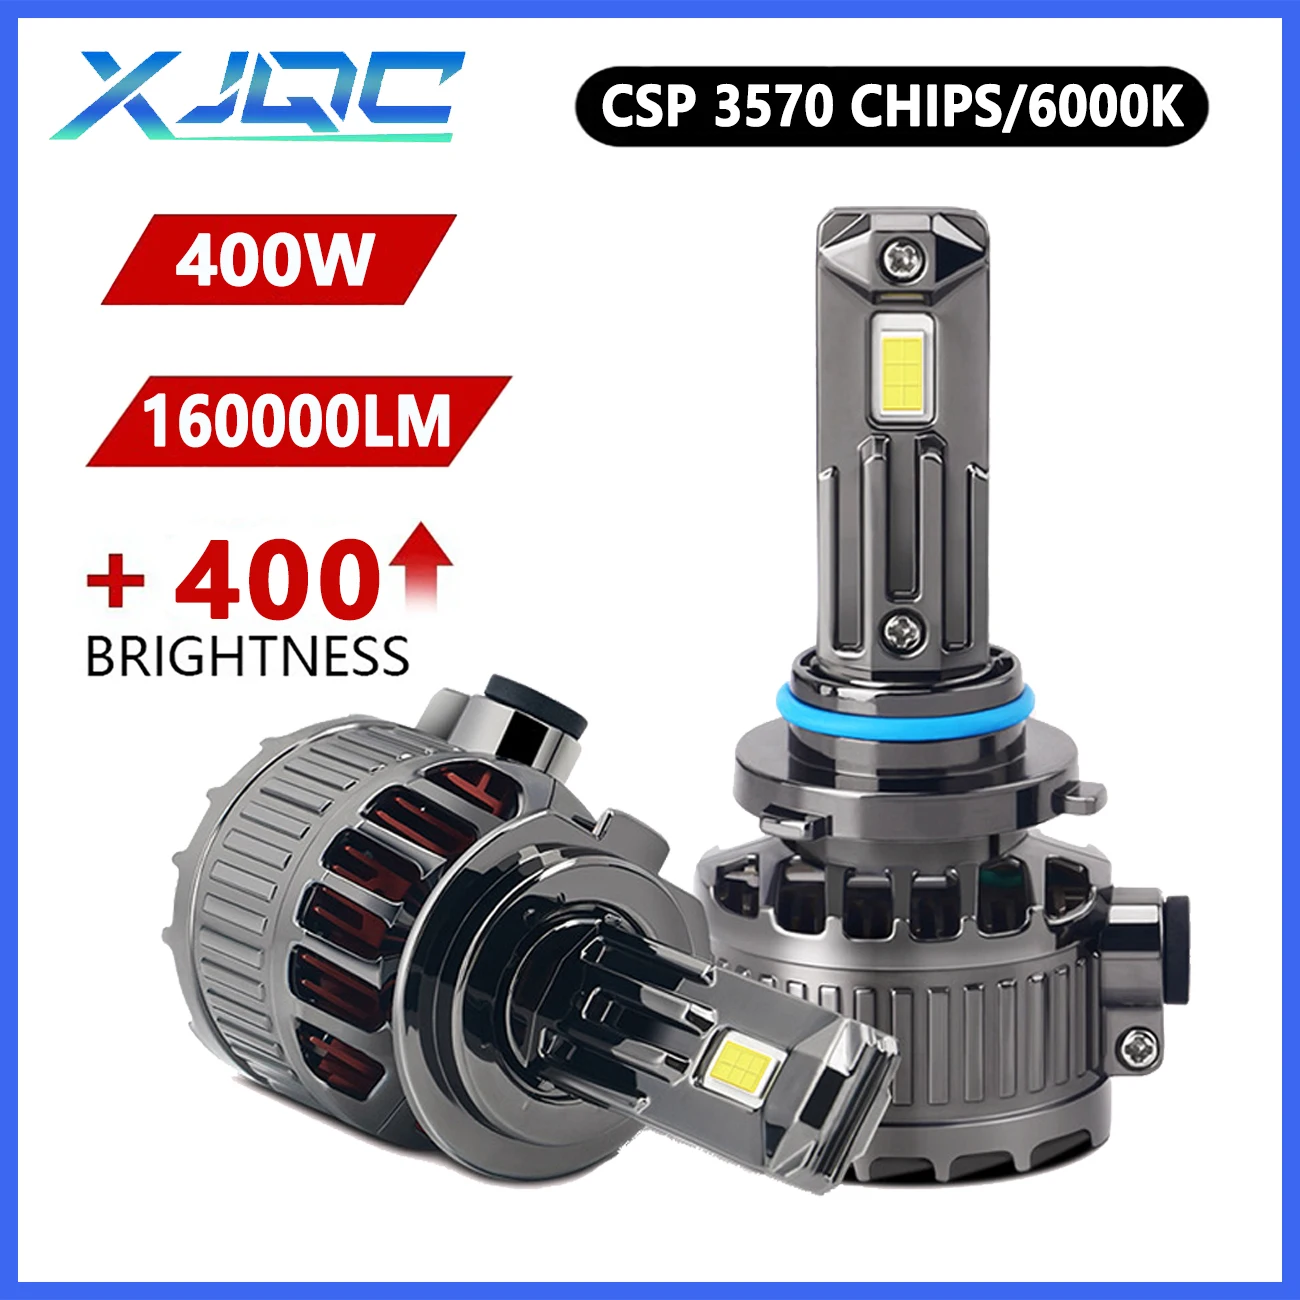 

XJQC Q15 H4 H7 Car LED Headlight 160000LM 6000K 400W H1 H3 H8 H9 H11 9005 9006 HB4 CSP Chips 3570 12V High Power Headlamps Bulbs